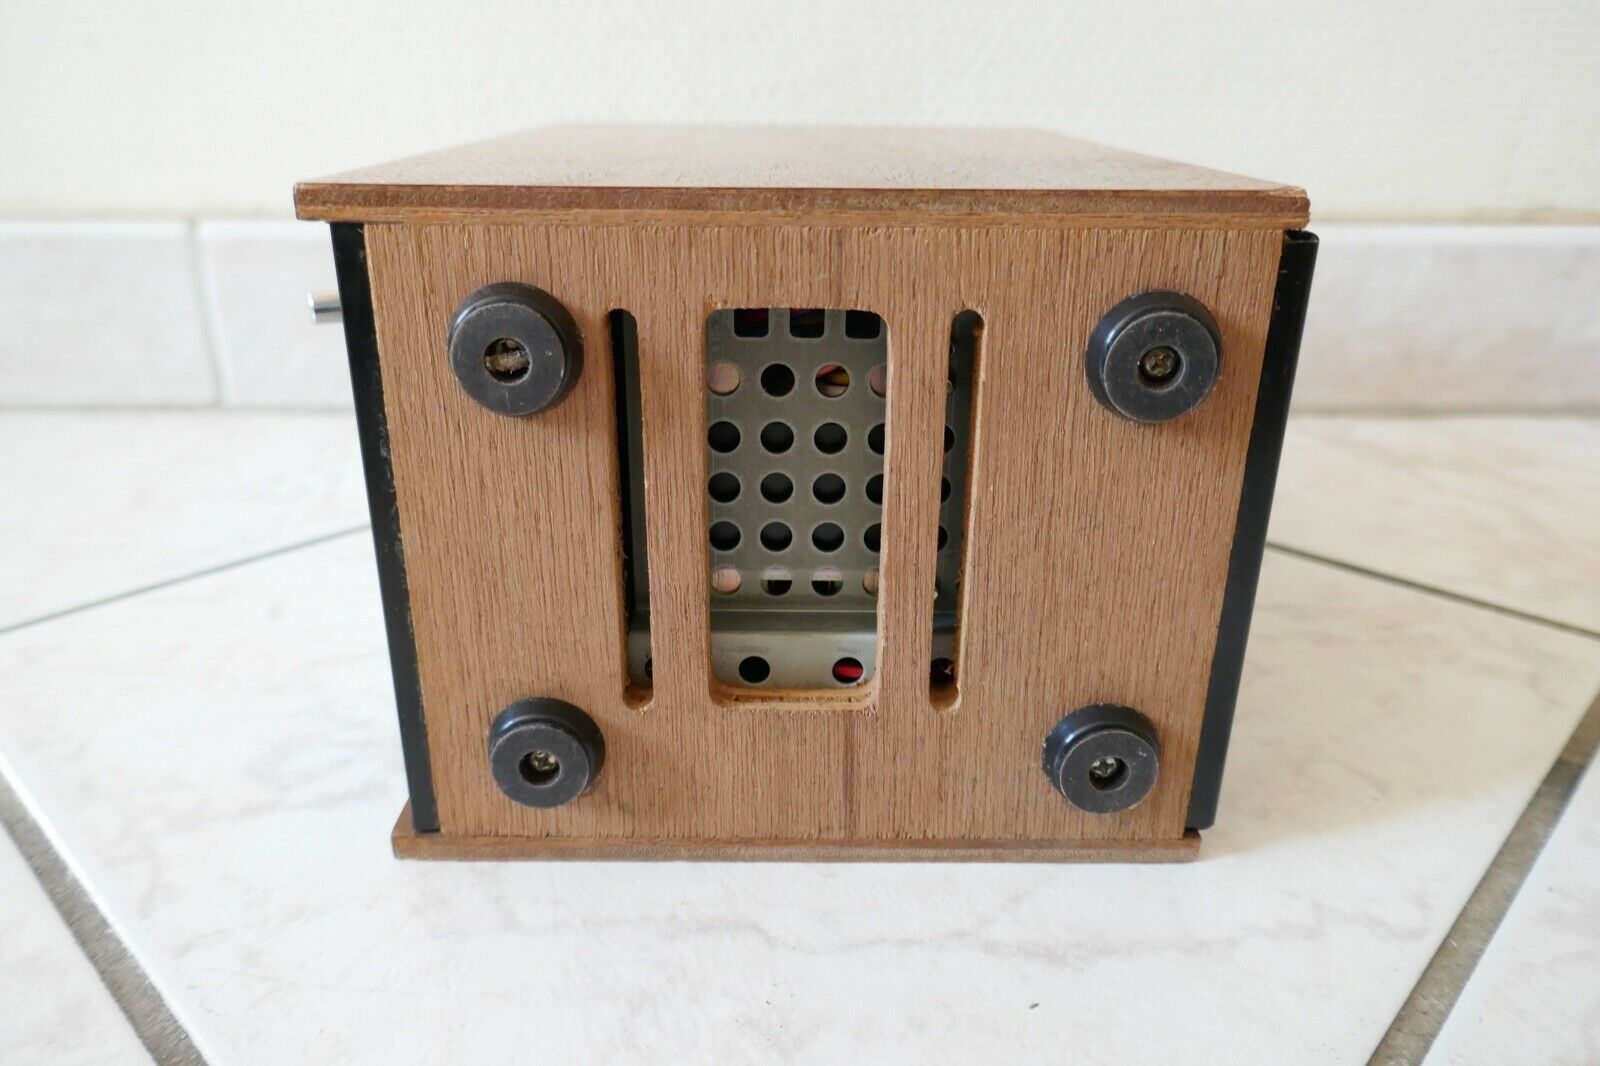 amplifier amplificateur sony TA-88 vintage occasion